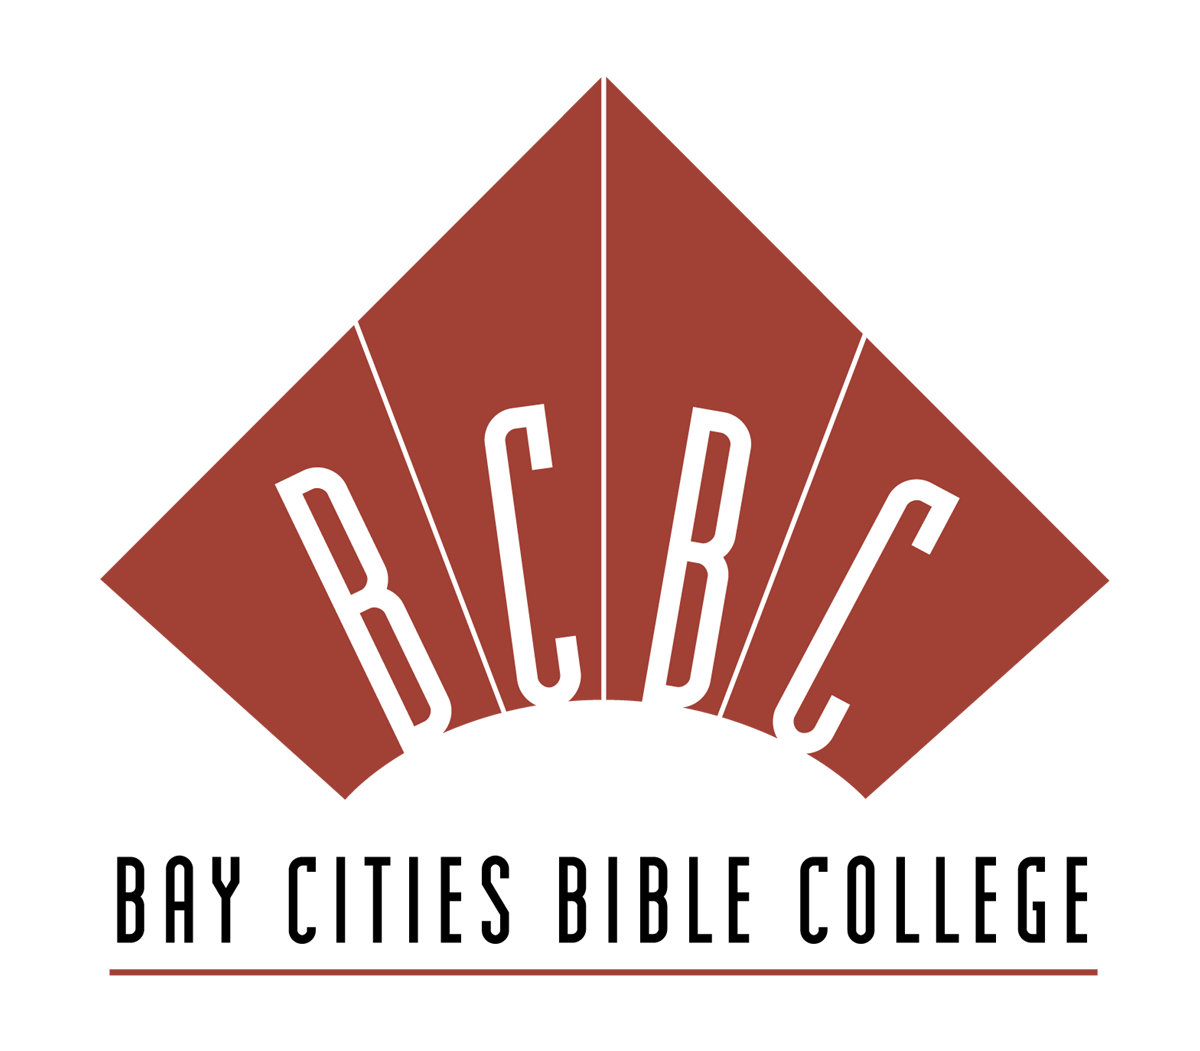 Bay Cities Bible College logo